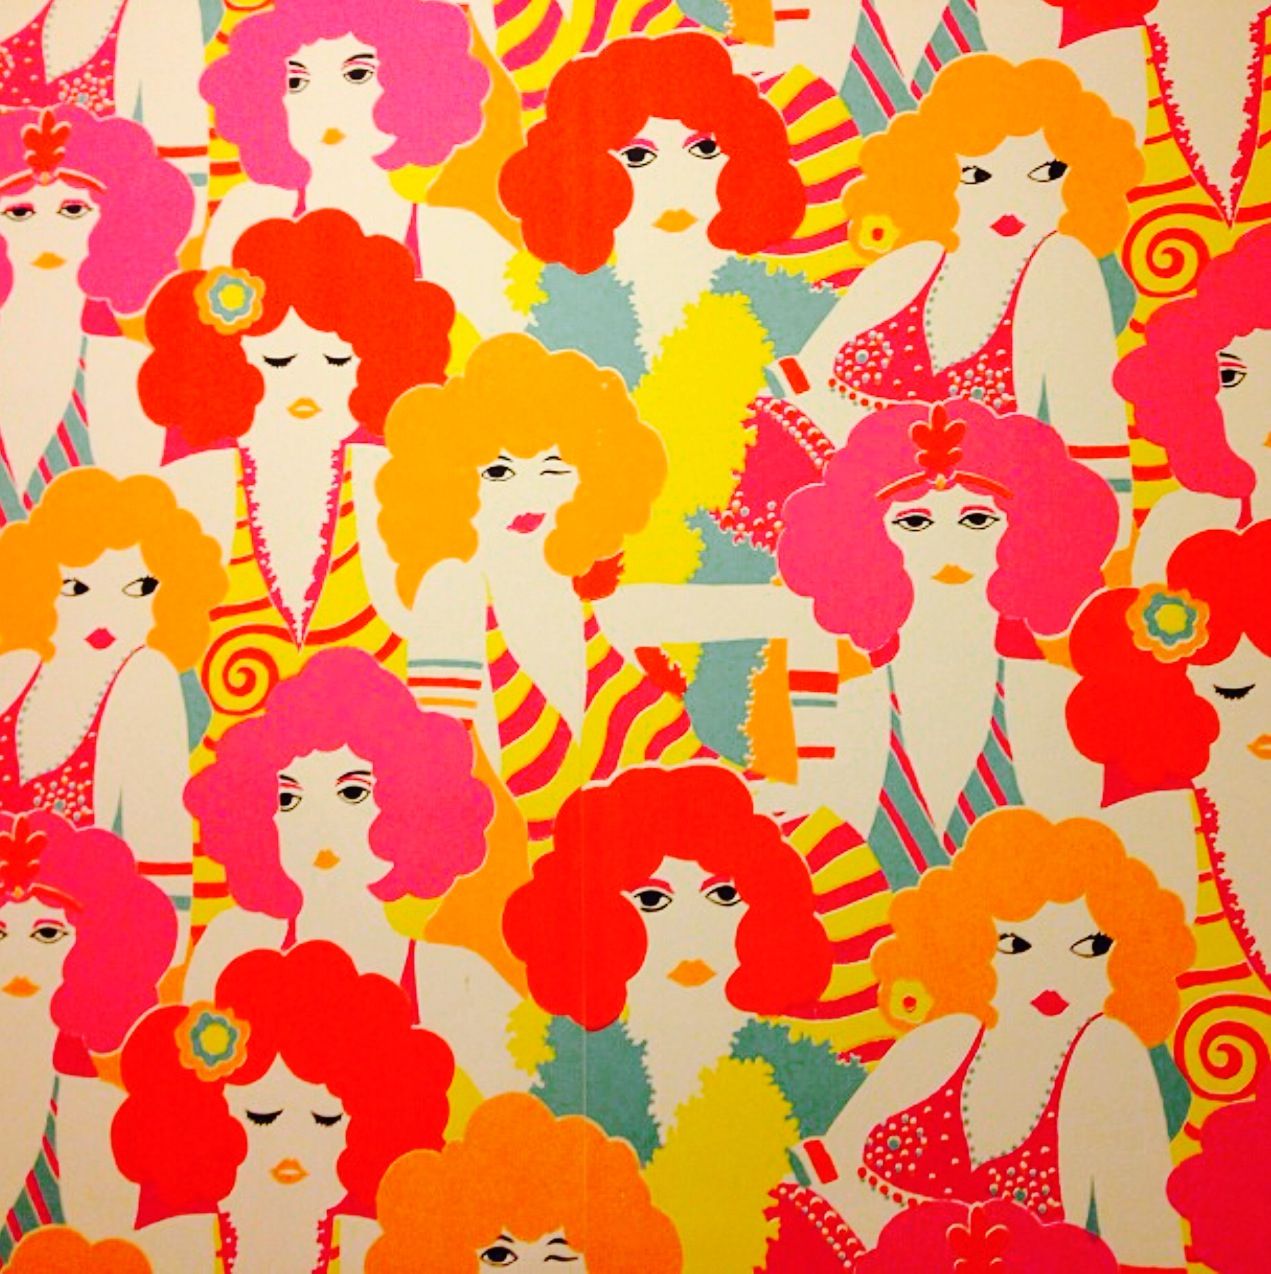 60s style wallpaper,art,textile,pattern,design,child art